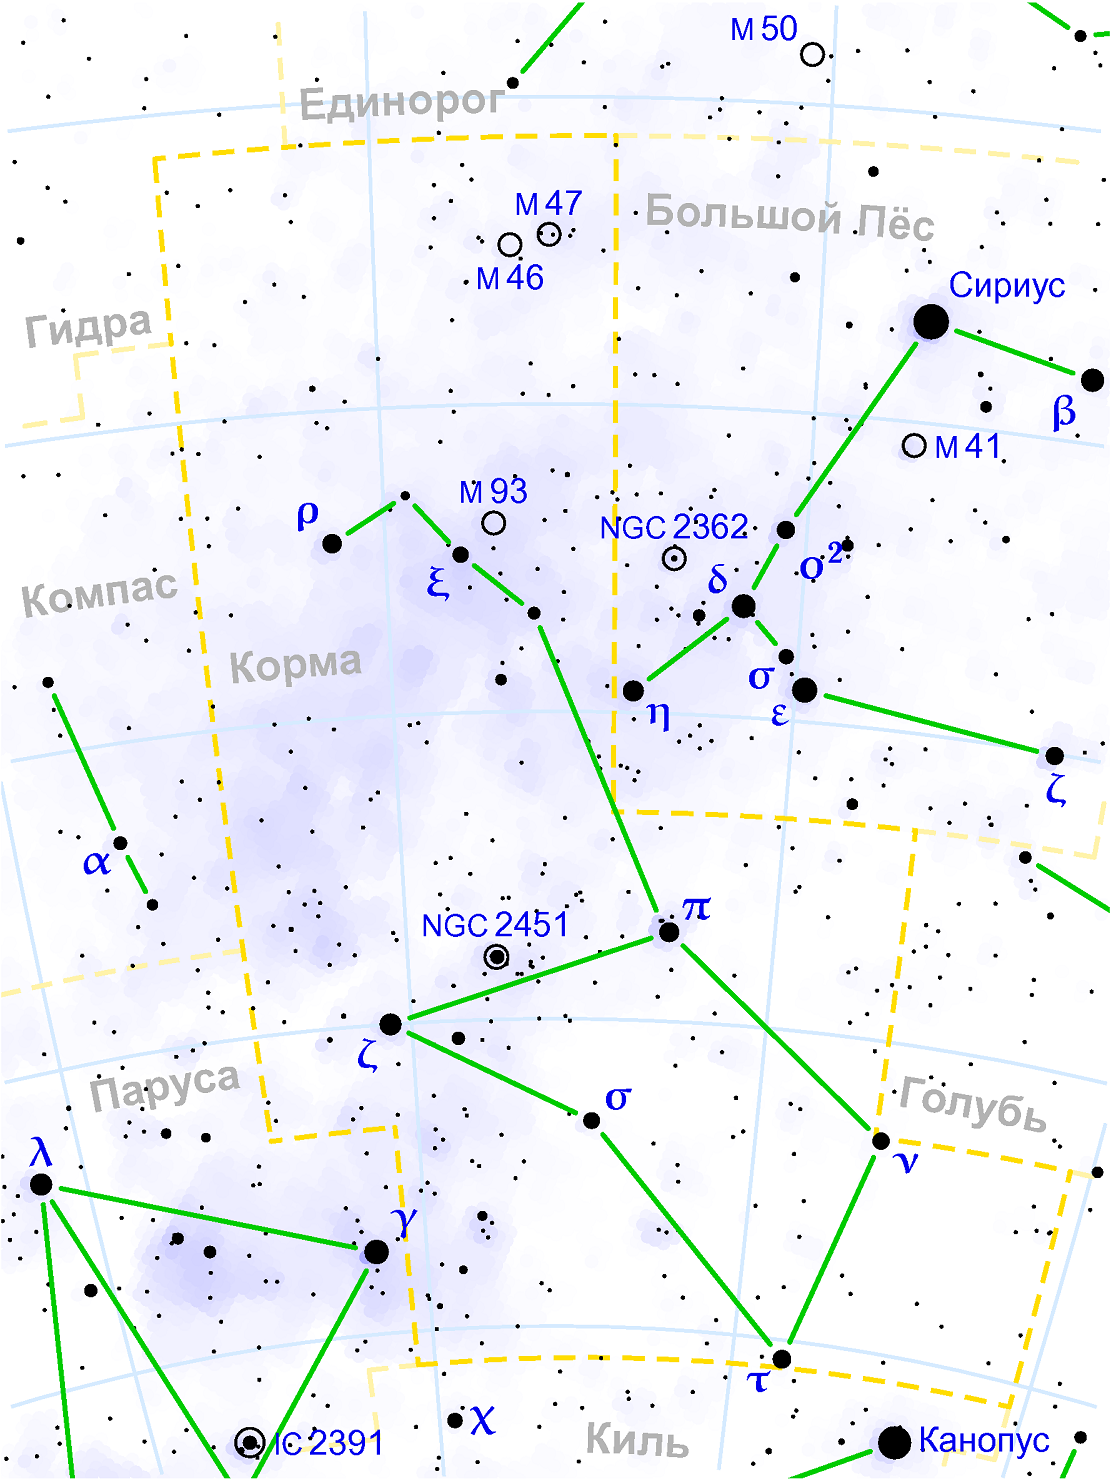 Position de M47 dans la constellation de Korma